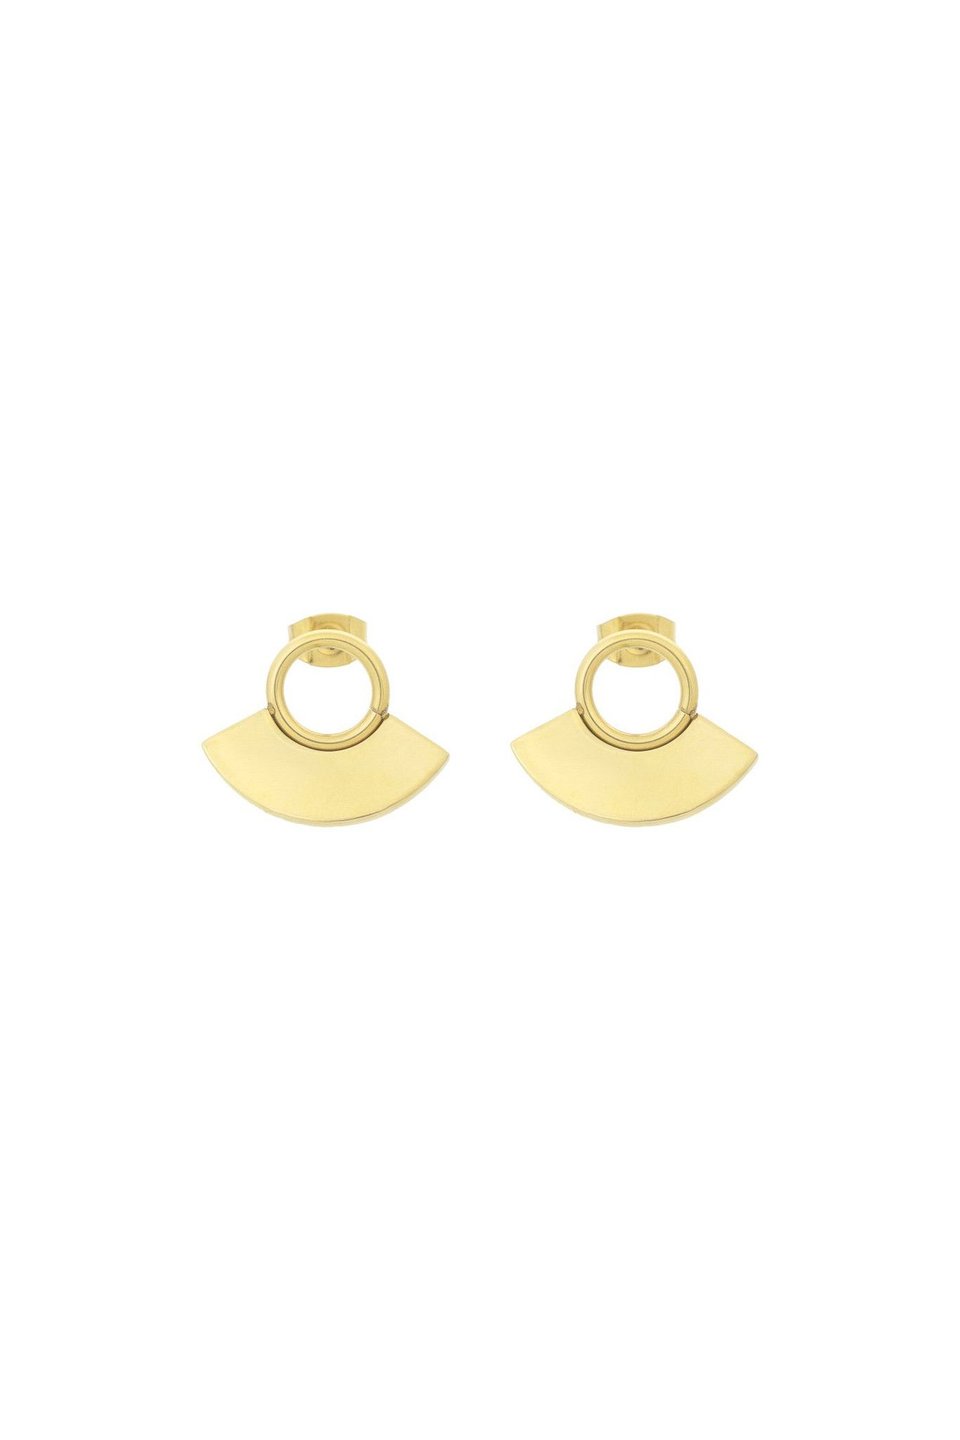 Bandhu Moonsun Earrings - Gold